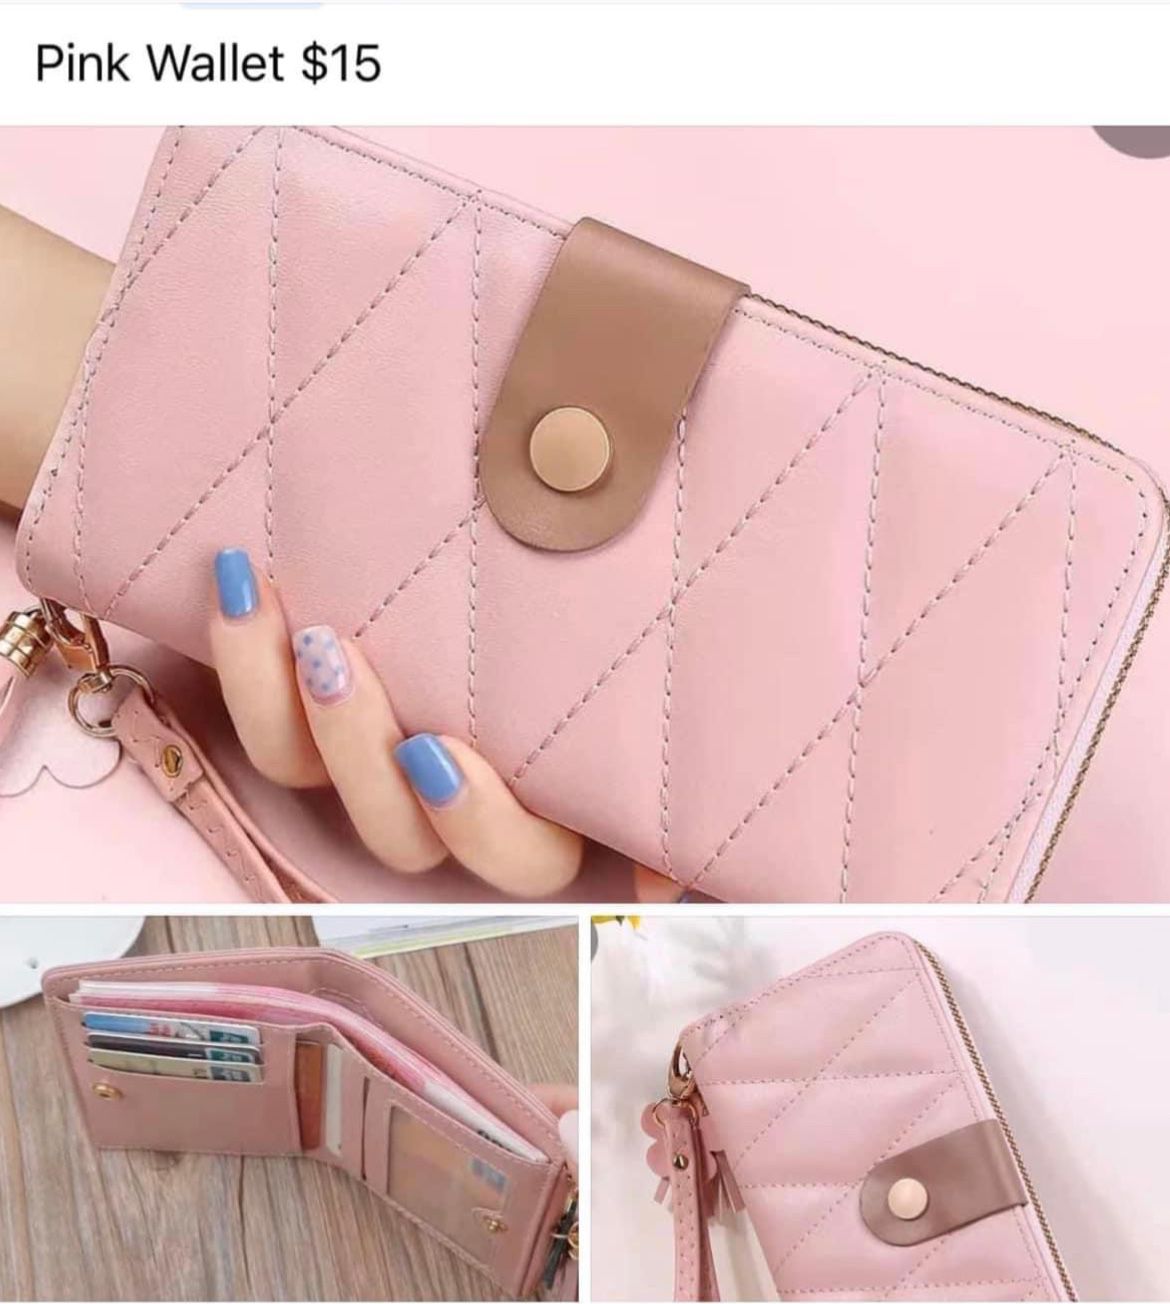 Beautiful, pink wallet, new